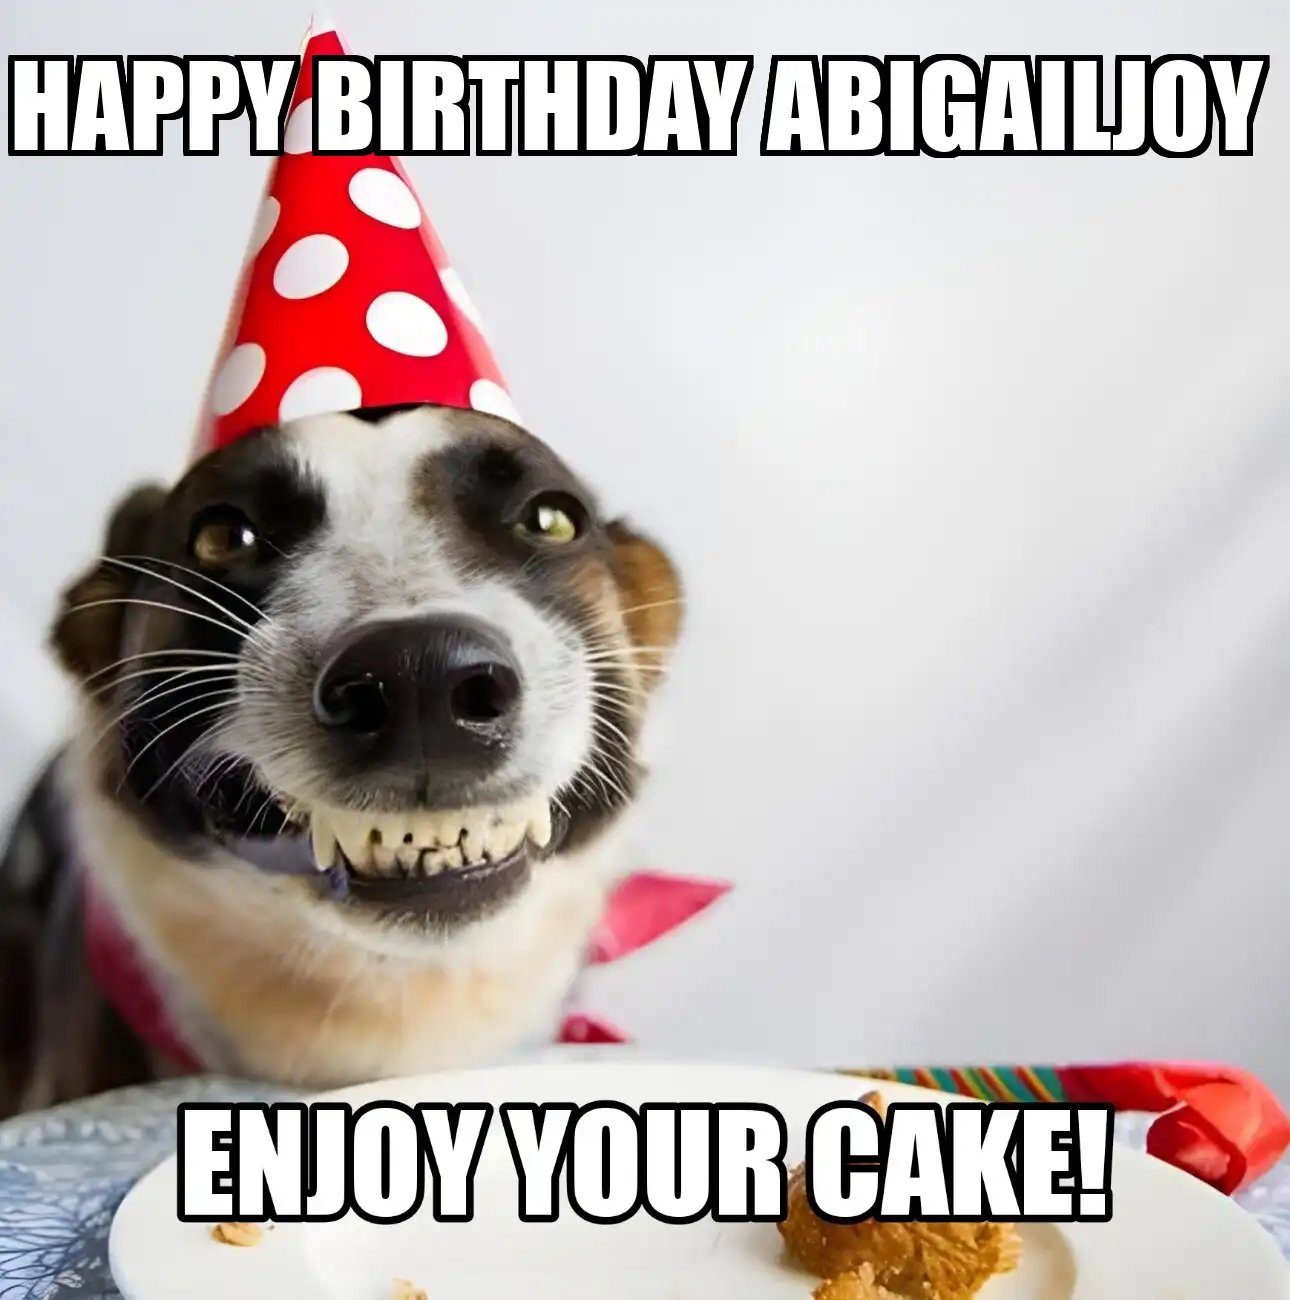 Happy Birthday Abigailjoy Enjoy Your Cake Dog Meme